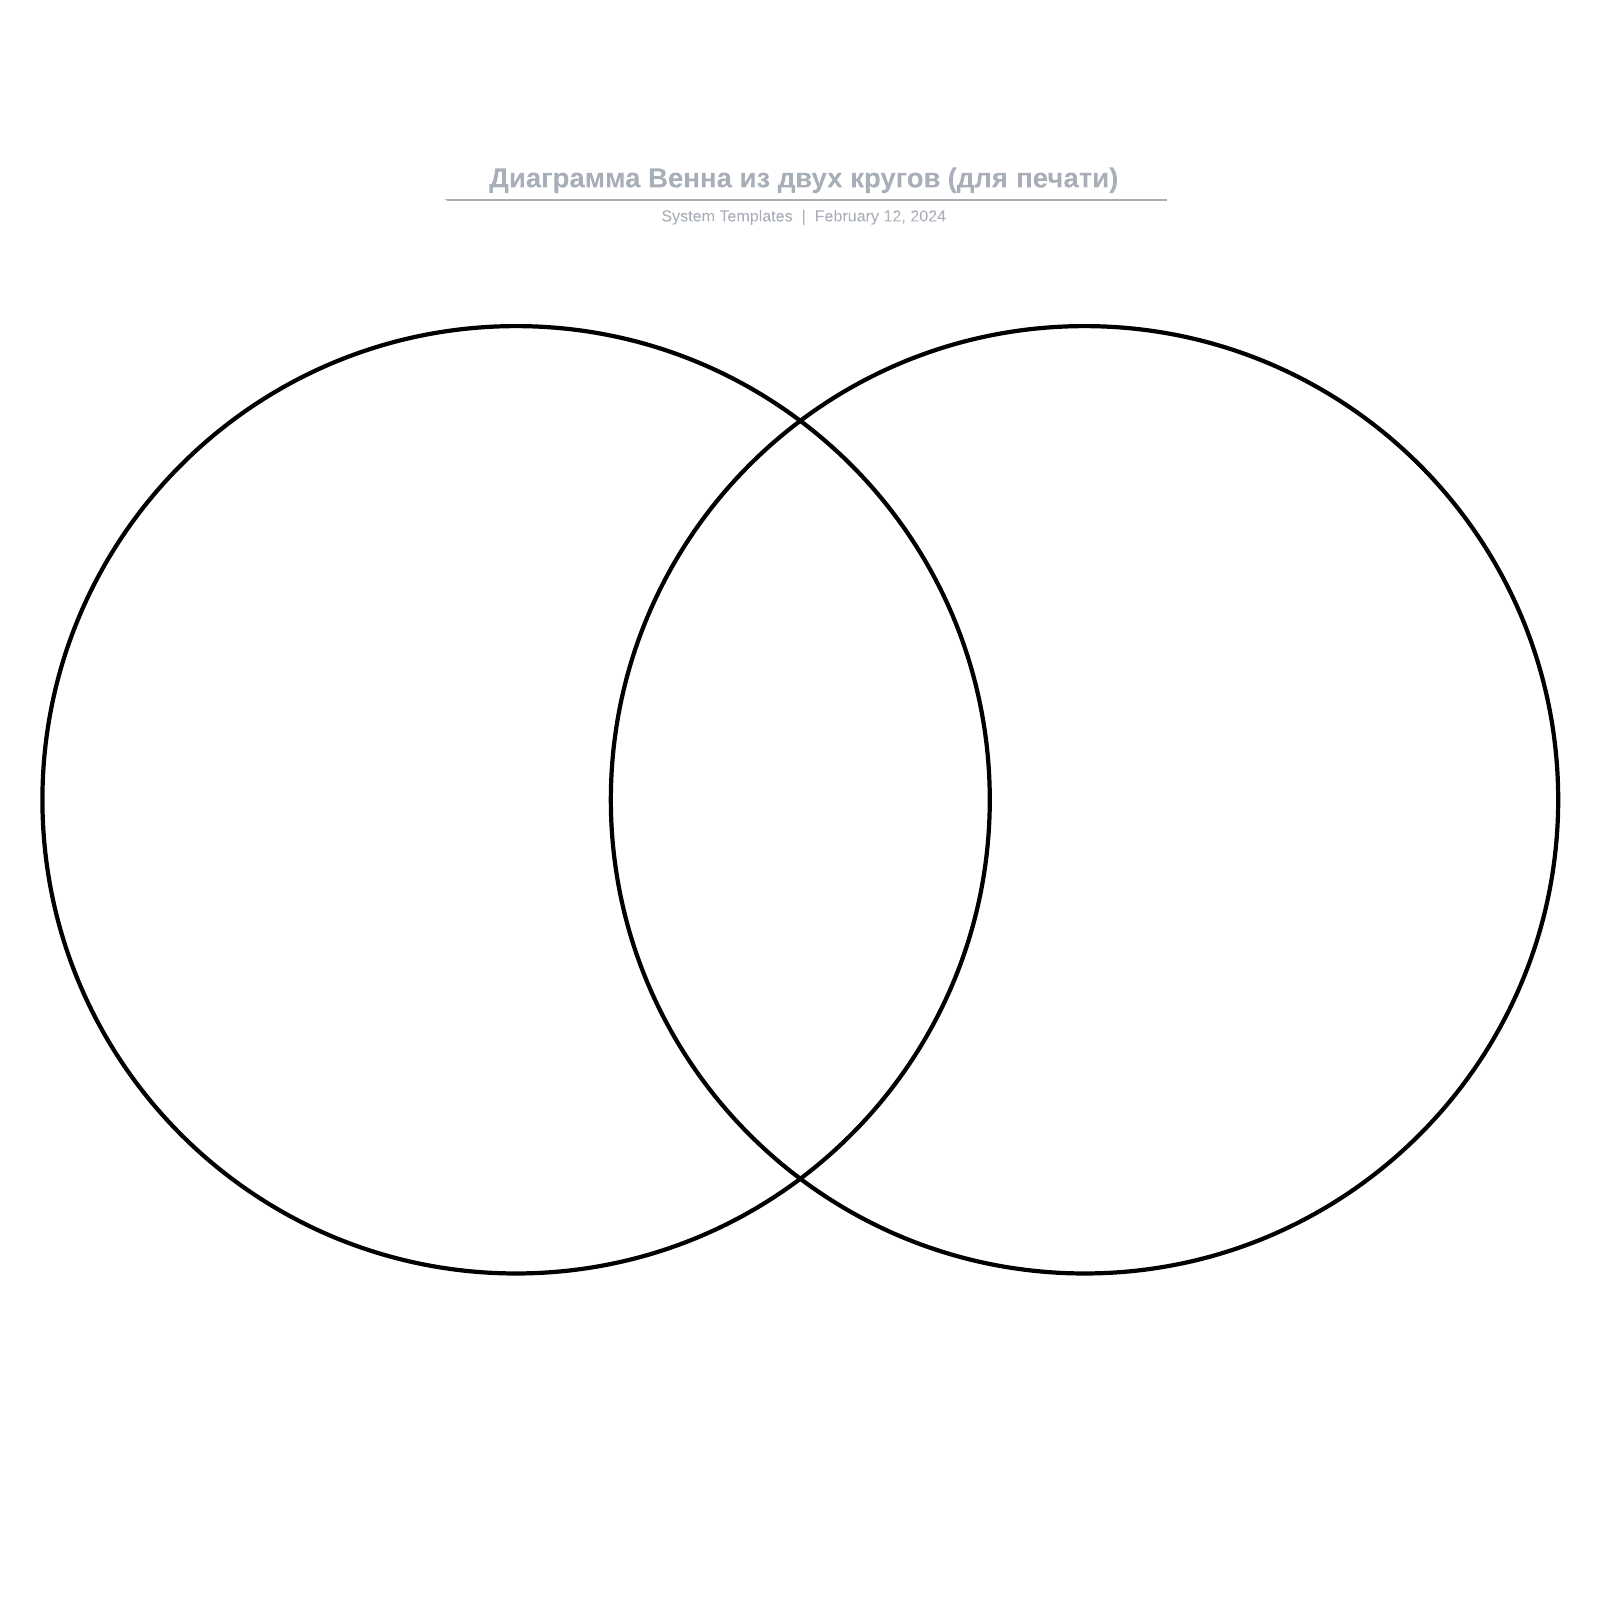 Диаграмма Венна из двух кругов (для печати) example